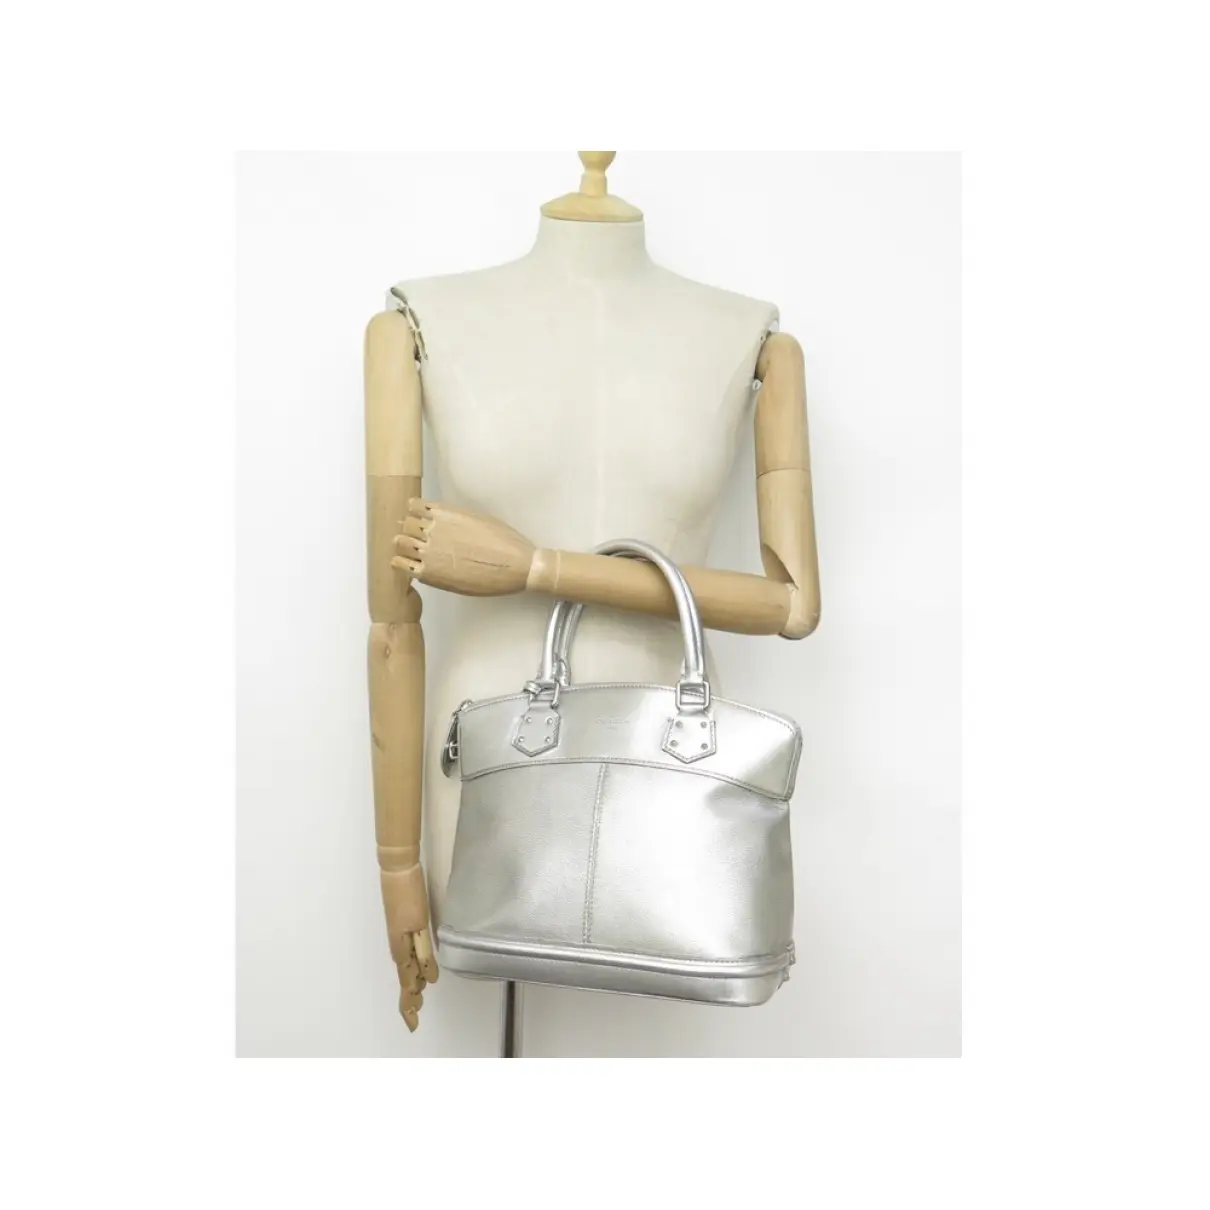 Buy Louis Vuitton Lockit leather handbag online